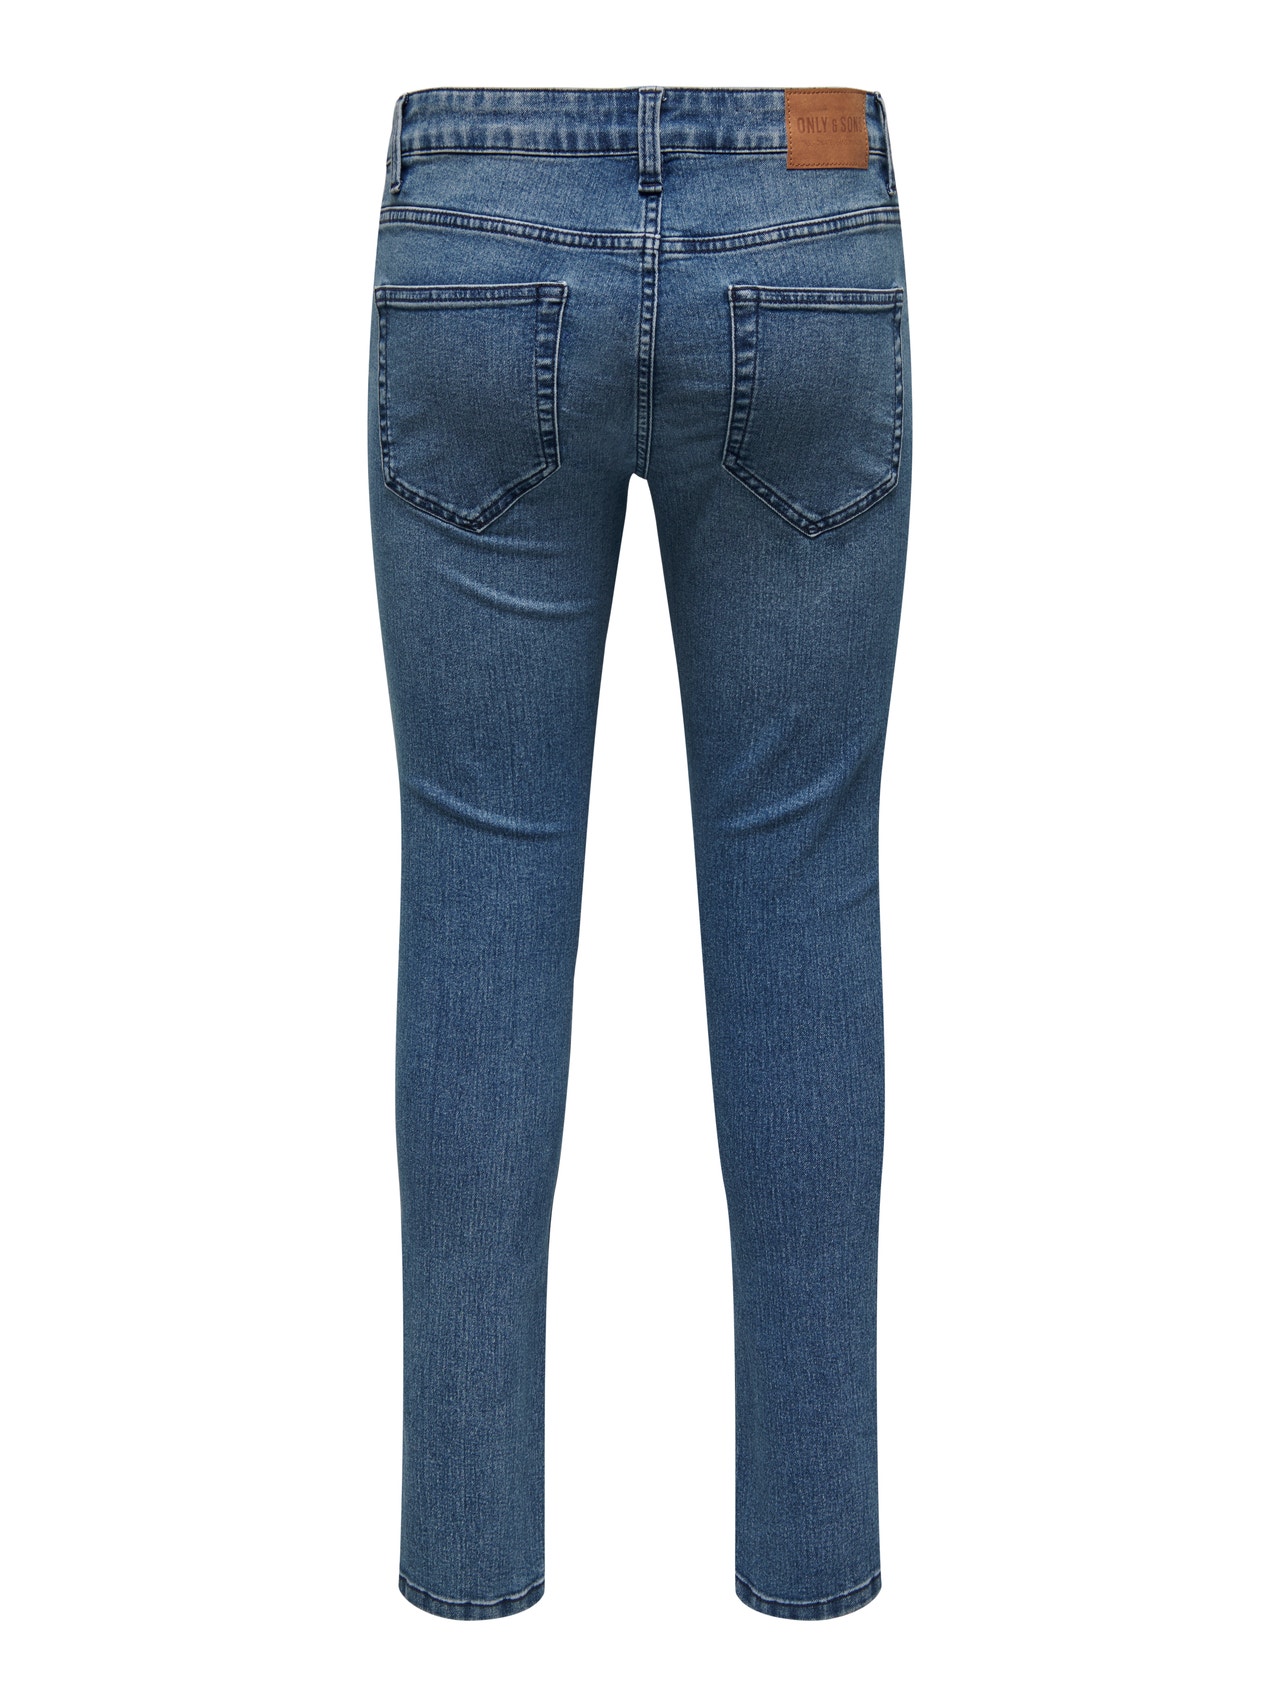 ONLY & SONS Jeans Regular Fit Taille moyenne -Light Medium Blue Denim - 22027900